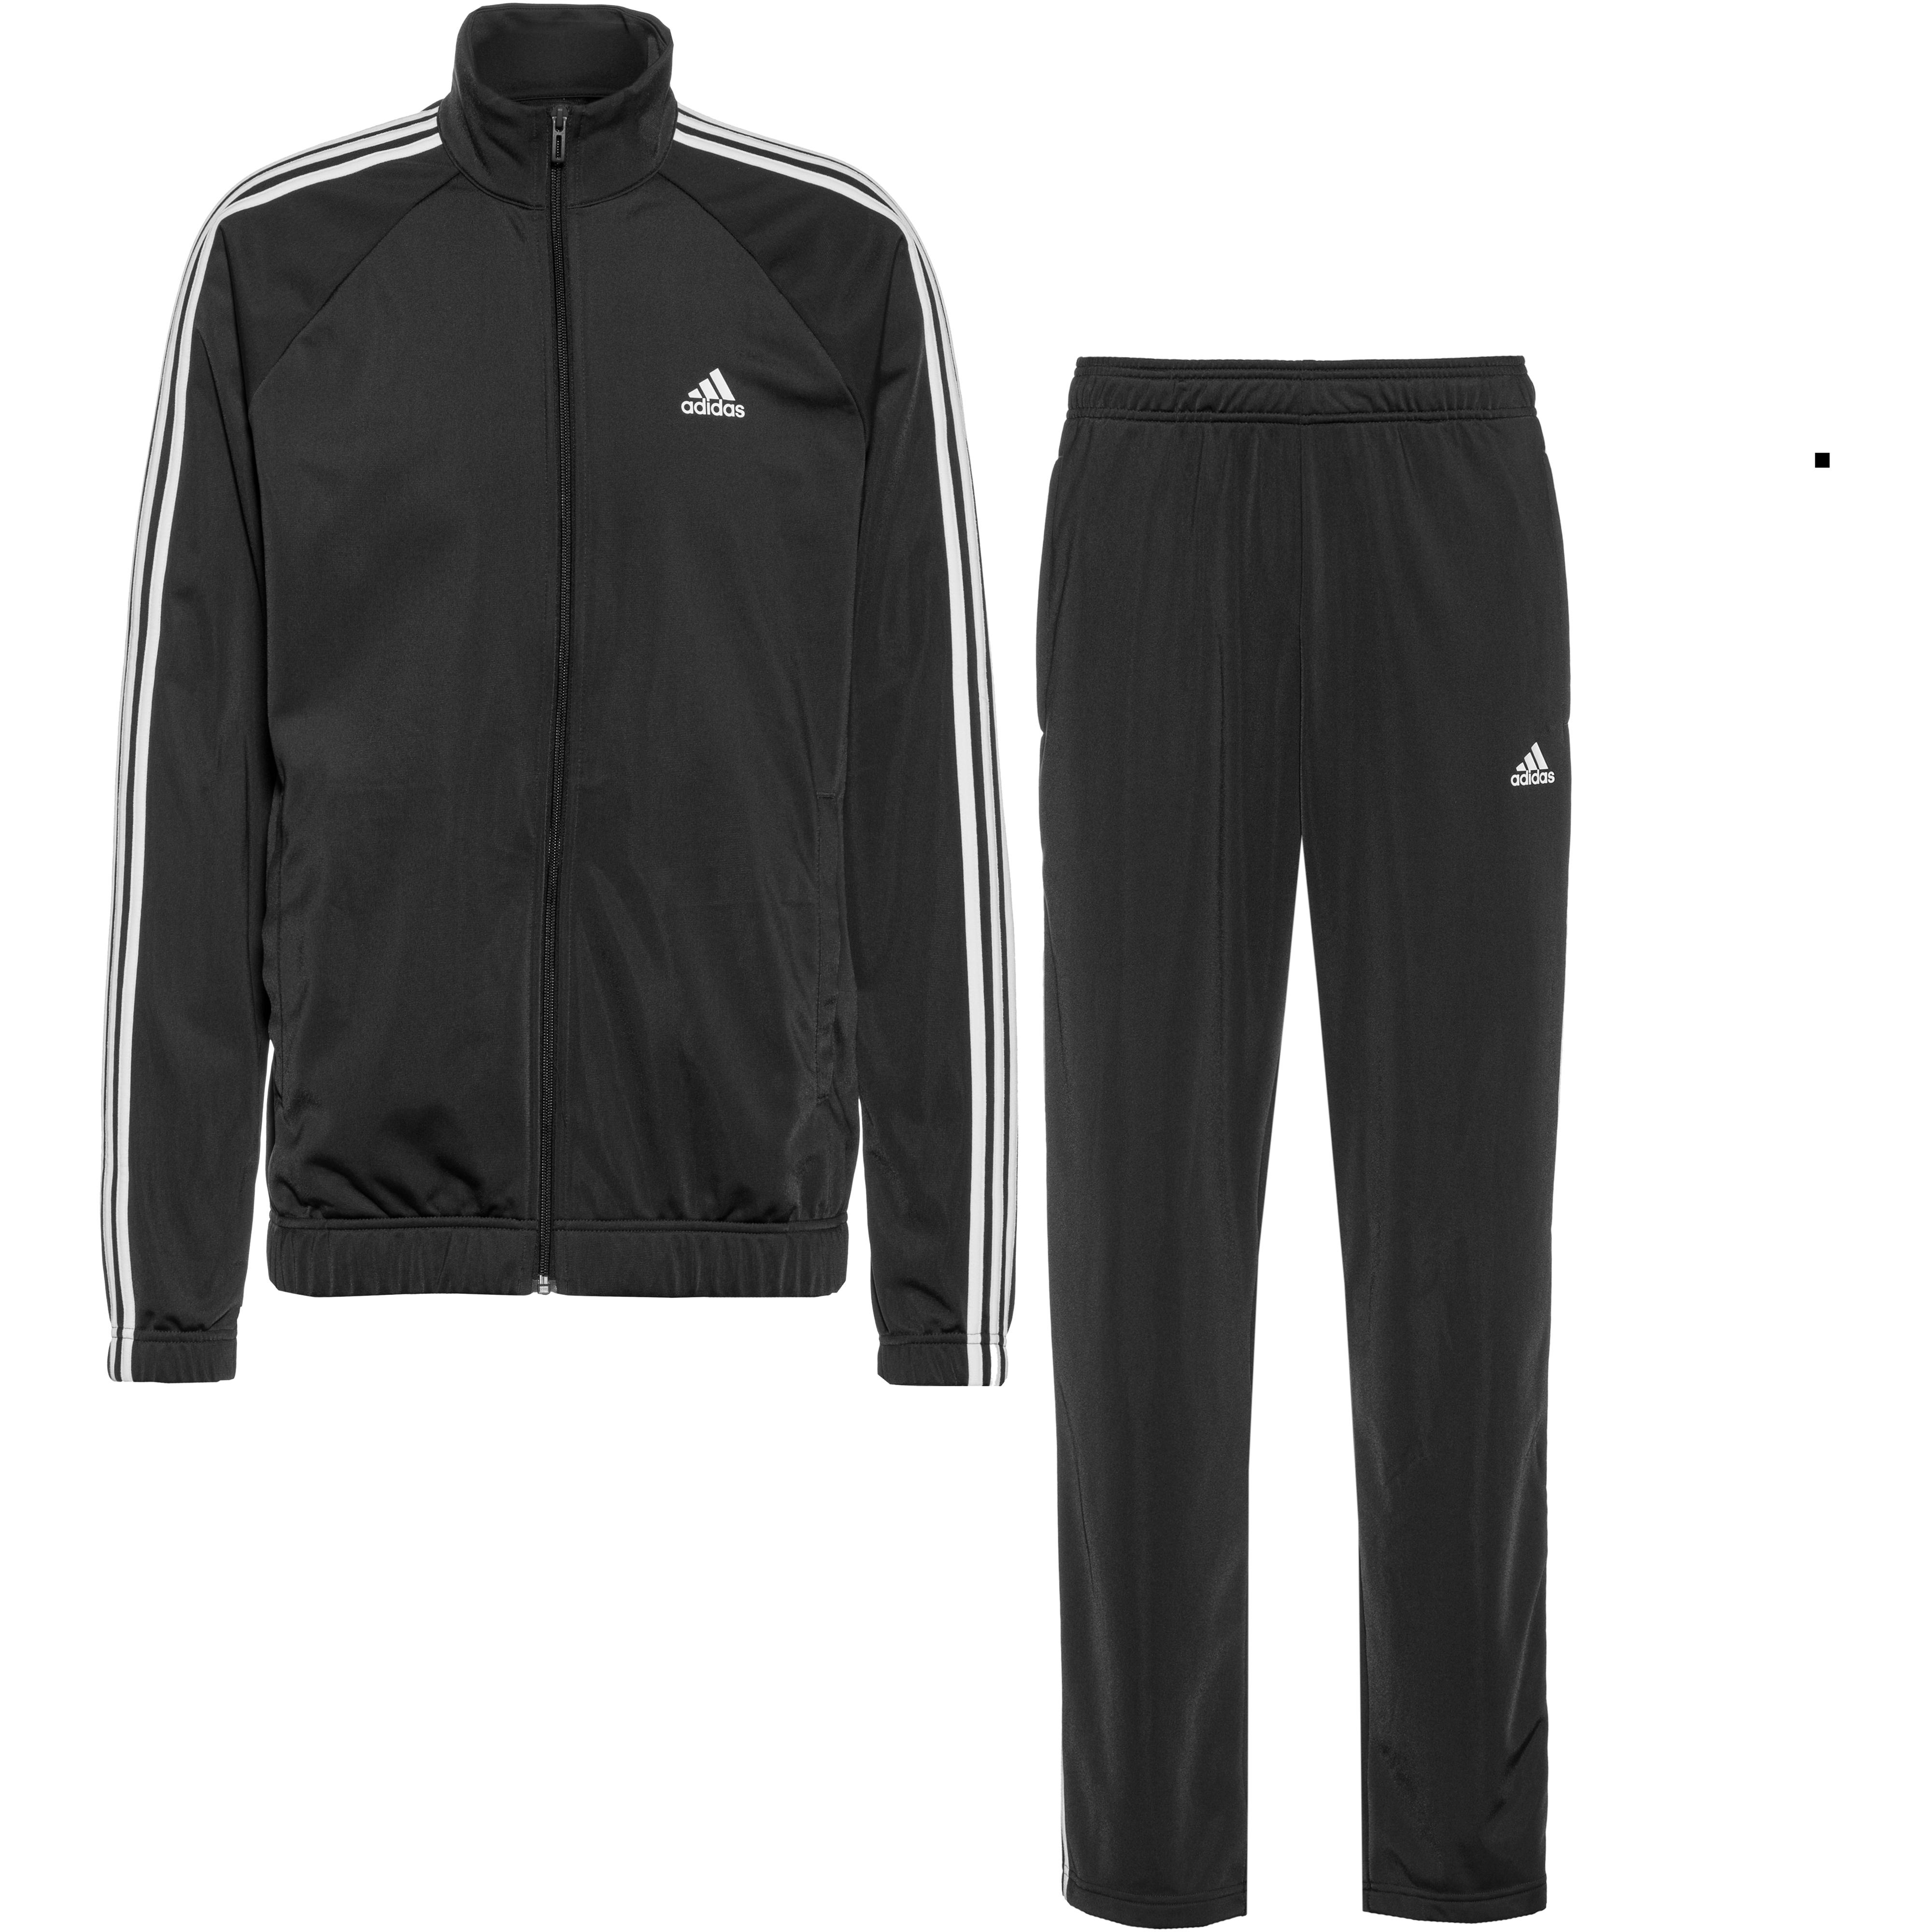 Adidas Trainingsanzug Herren black im 